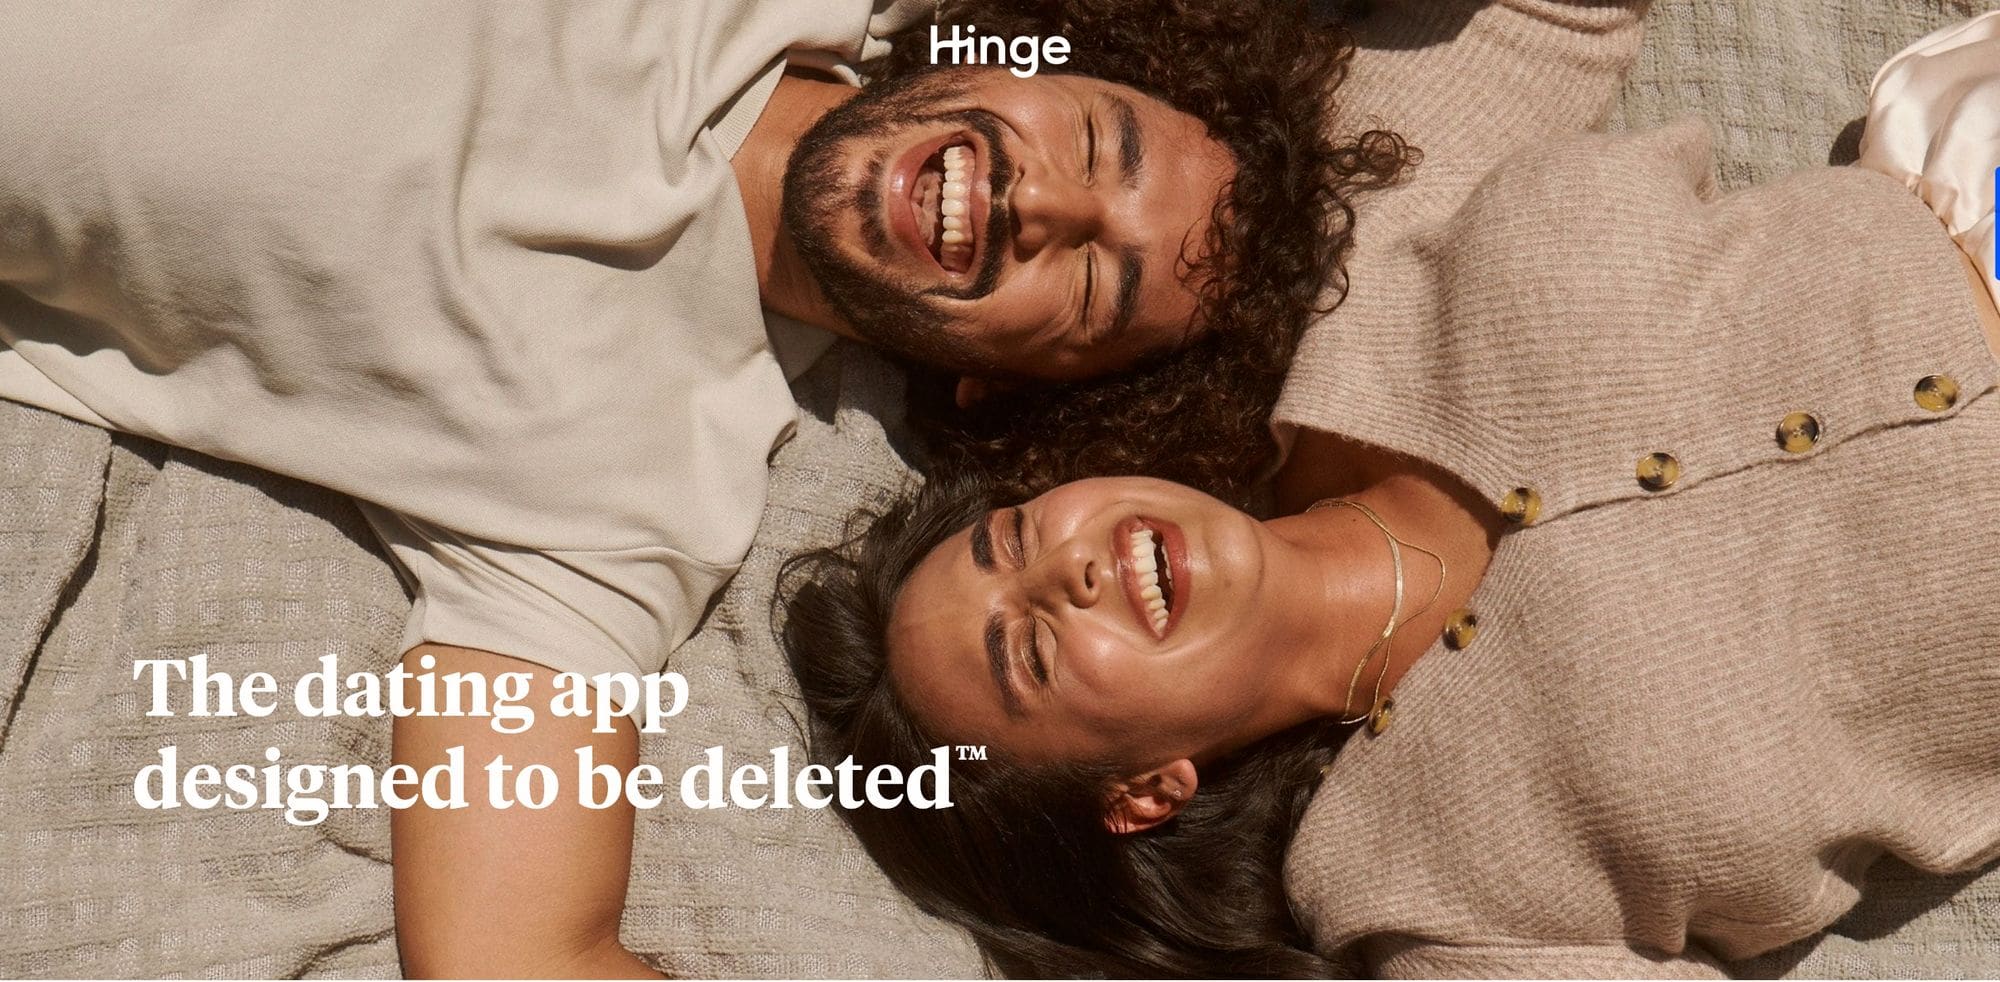 The Best Dating App designed to delete - Hinge